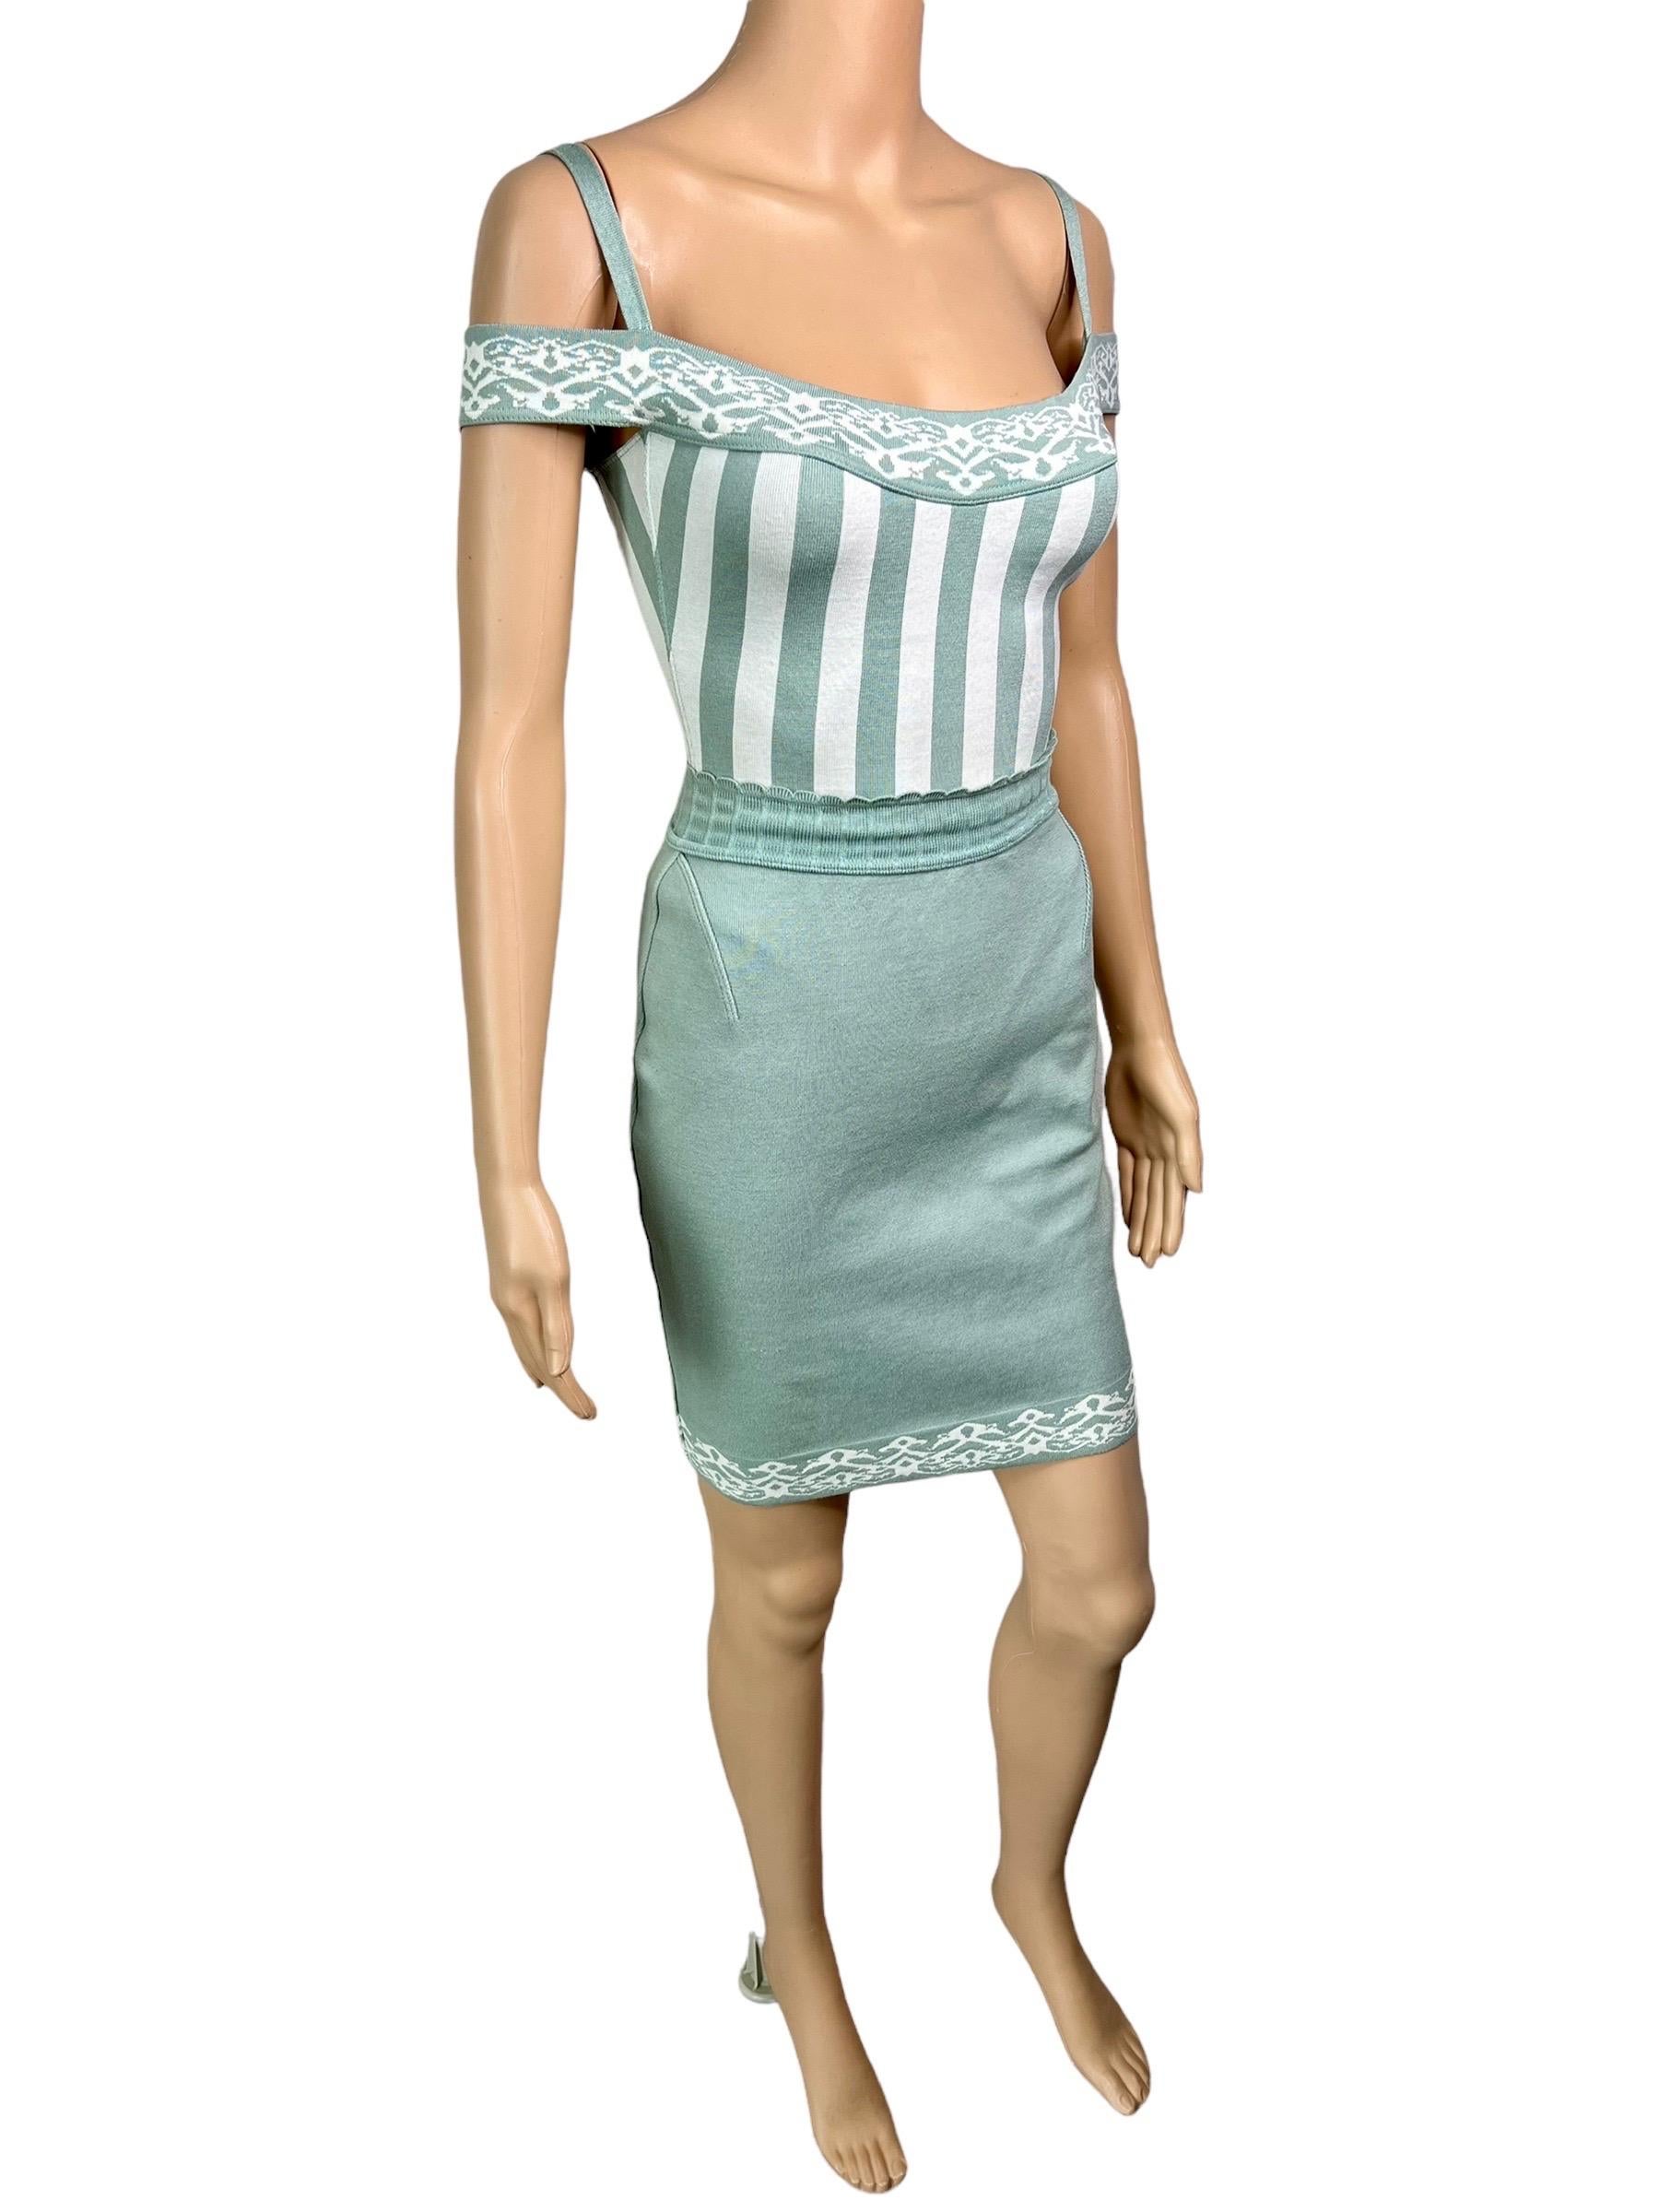 Gray Azzedine Alaia S/S 1992 Vintage Striped Bodysuit Top and Mini Skirt 2 Piece Set For Sale